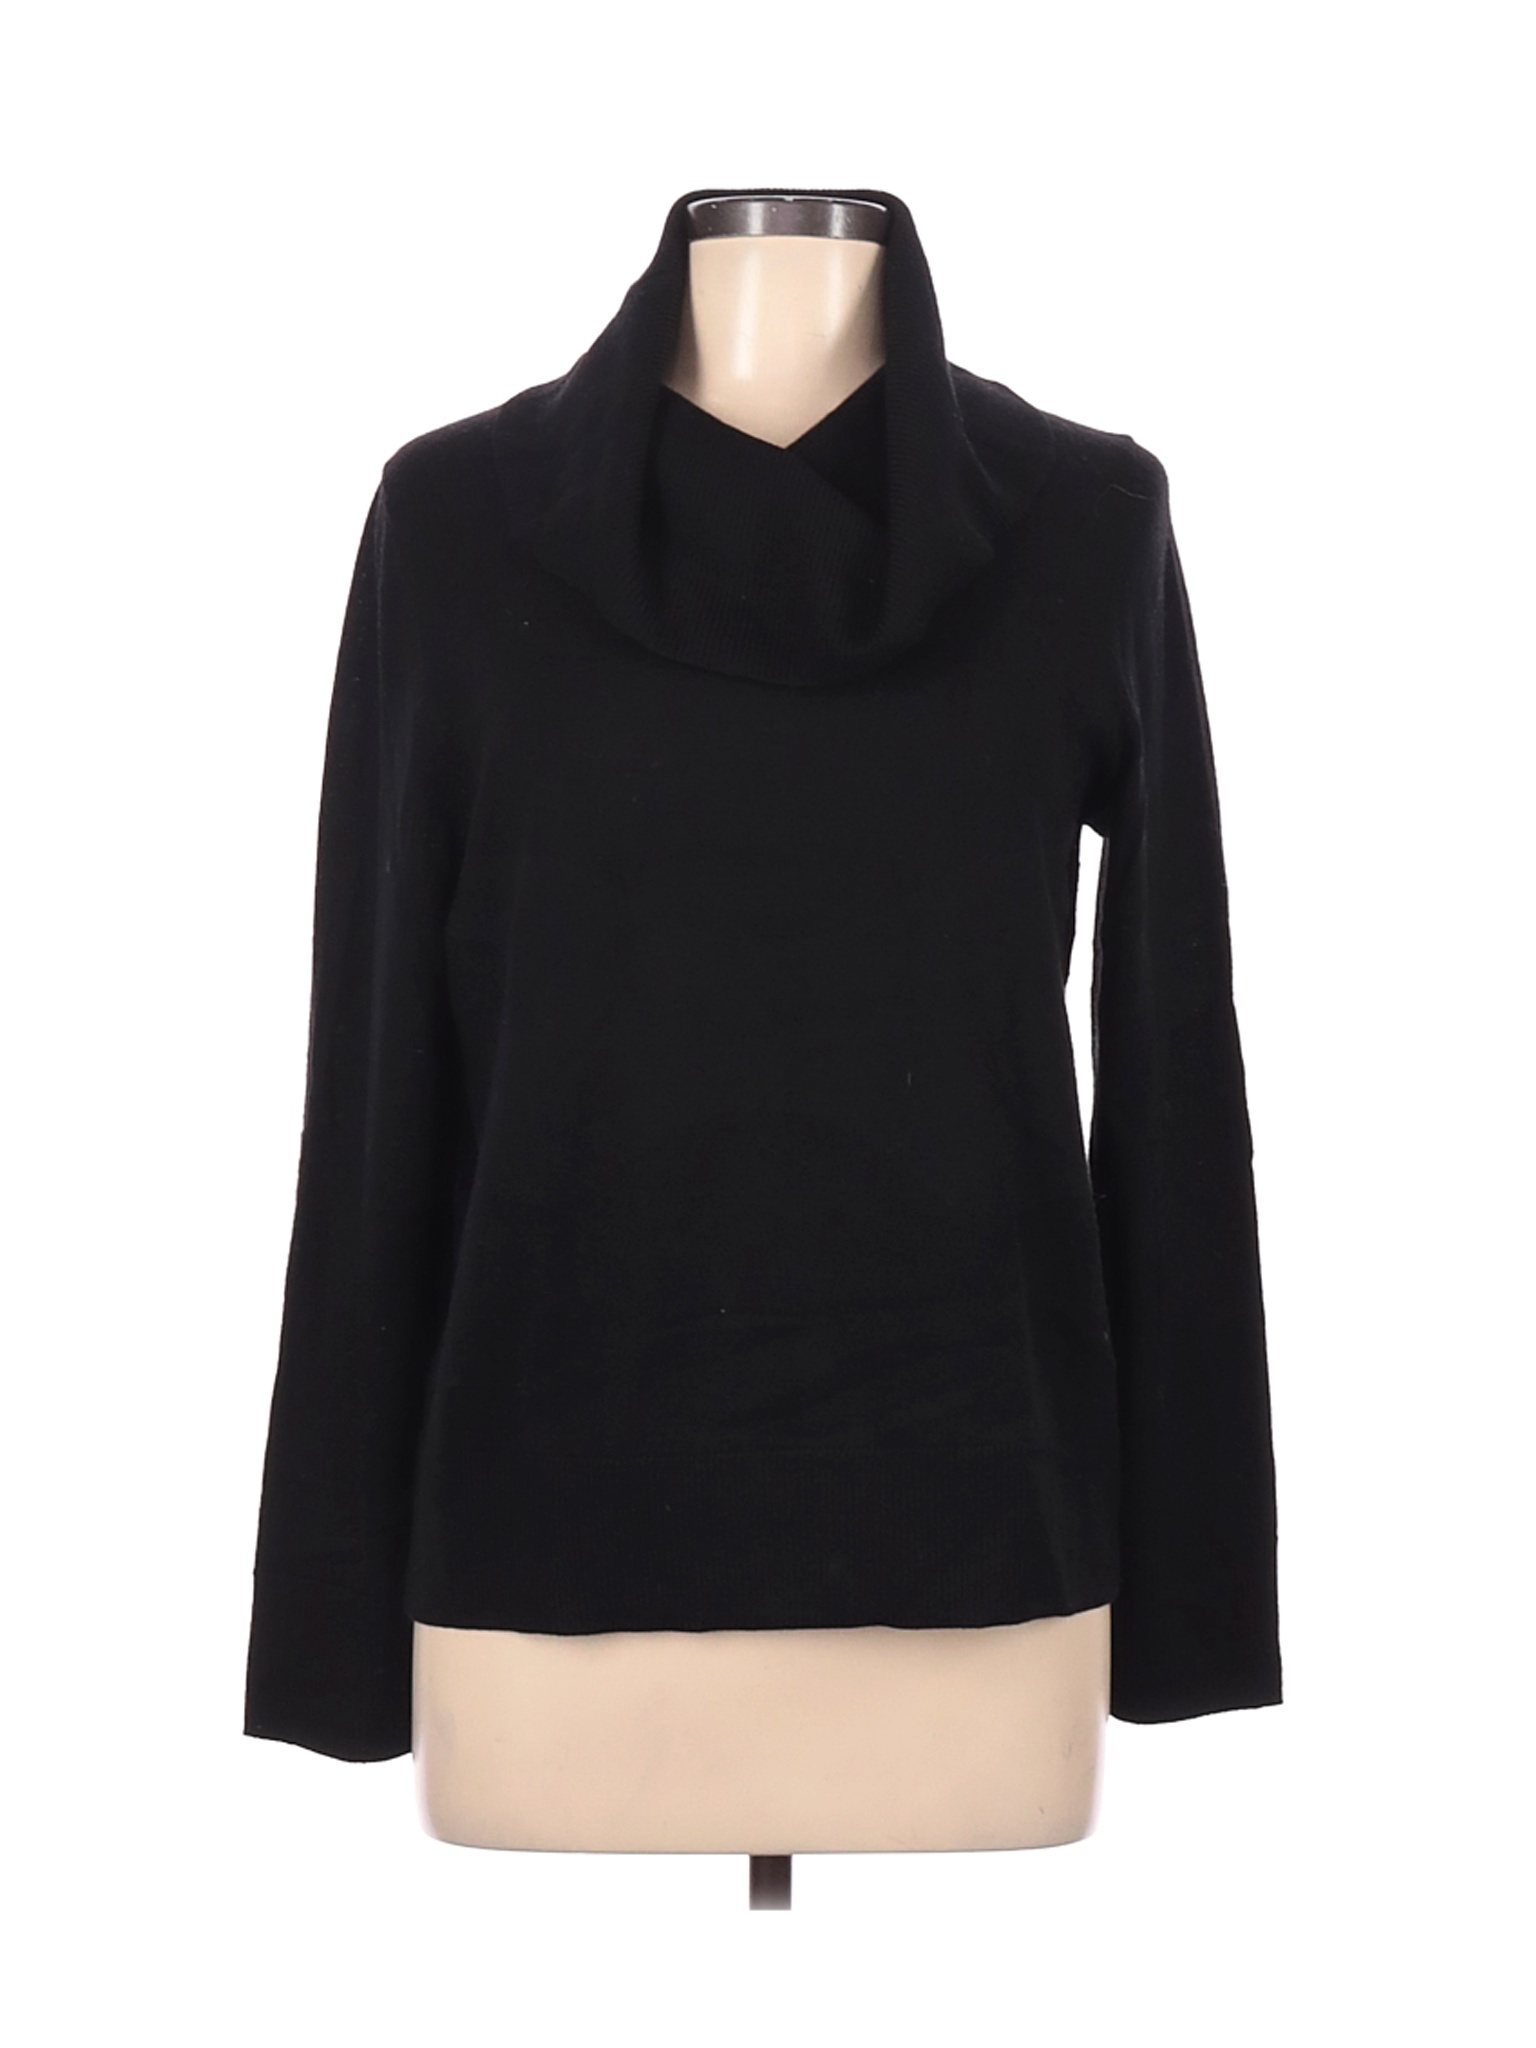 Talbots Women Black Wool Pullover Sweater L | eBay